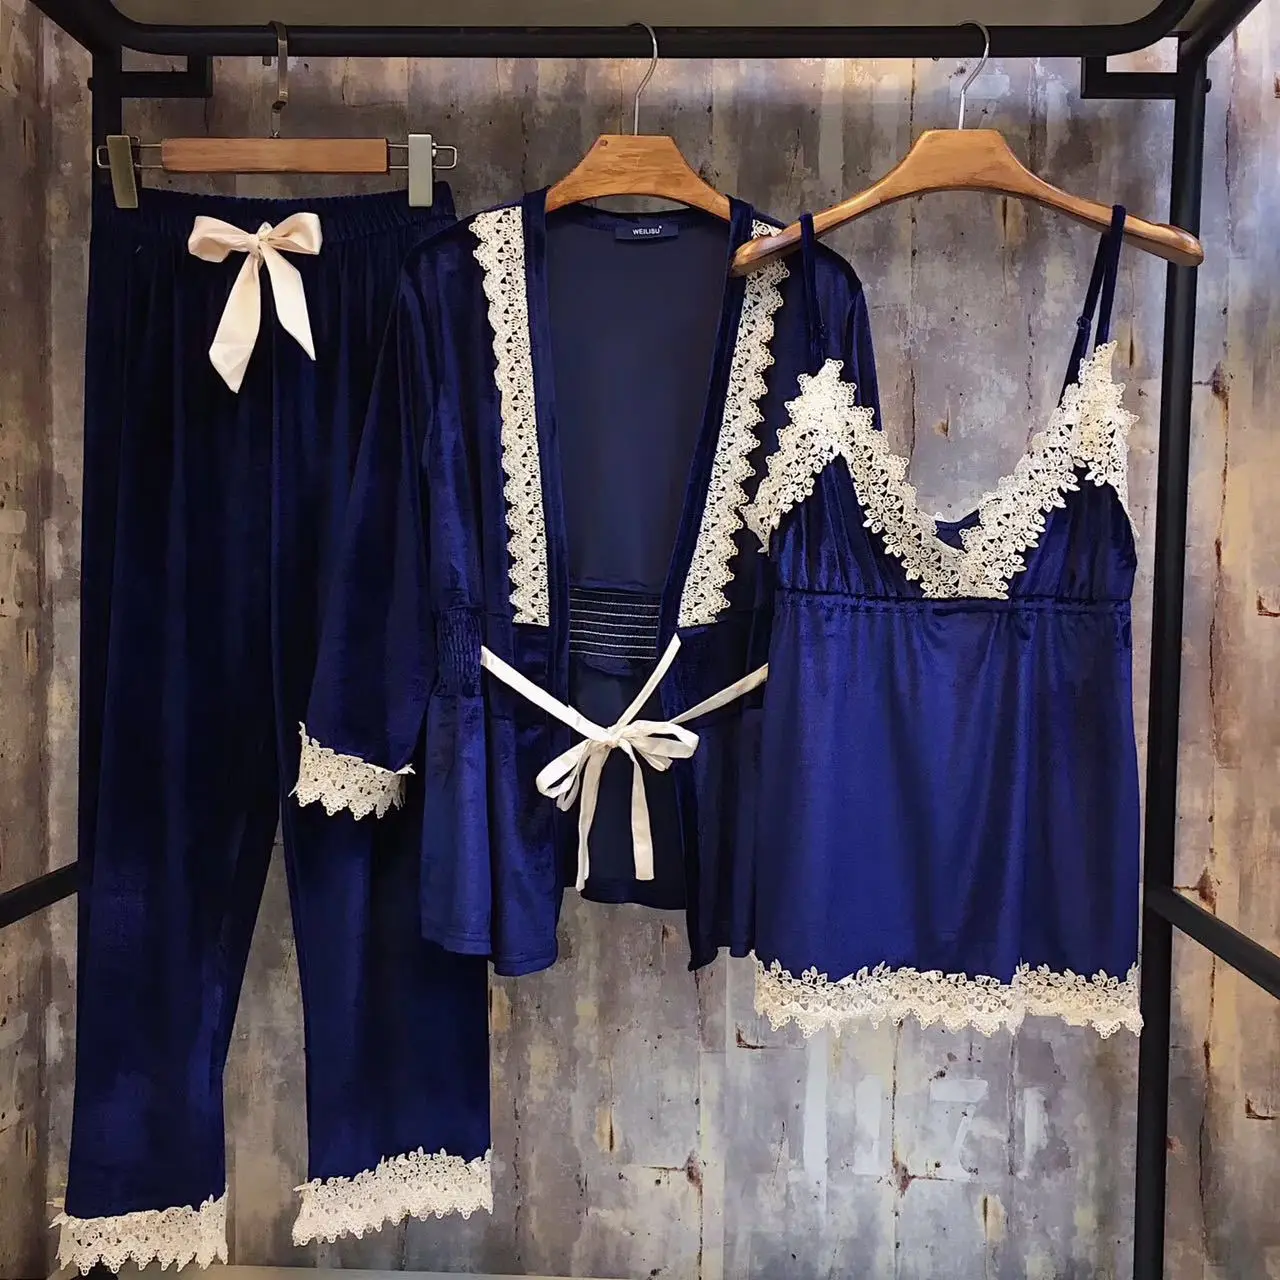 New Autumn Winter Women's Pajama Set Velvet Lace Nightwear Three Piece ...